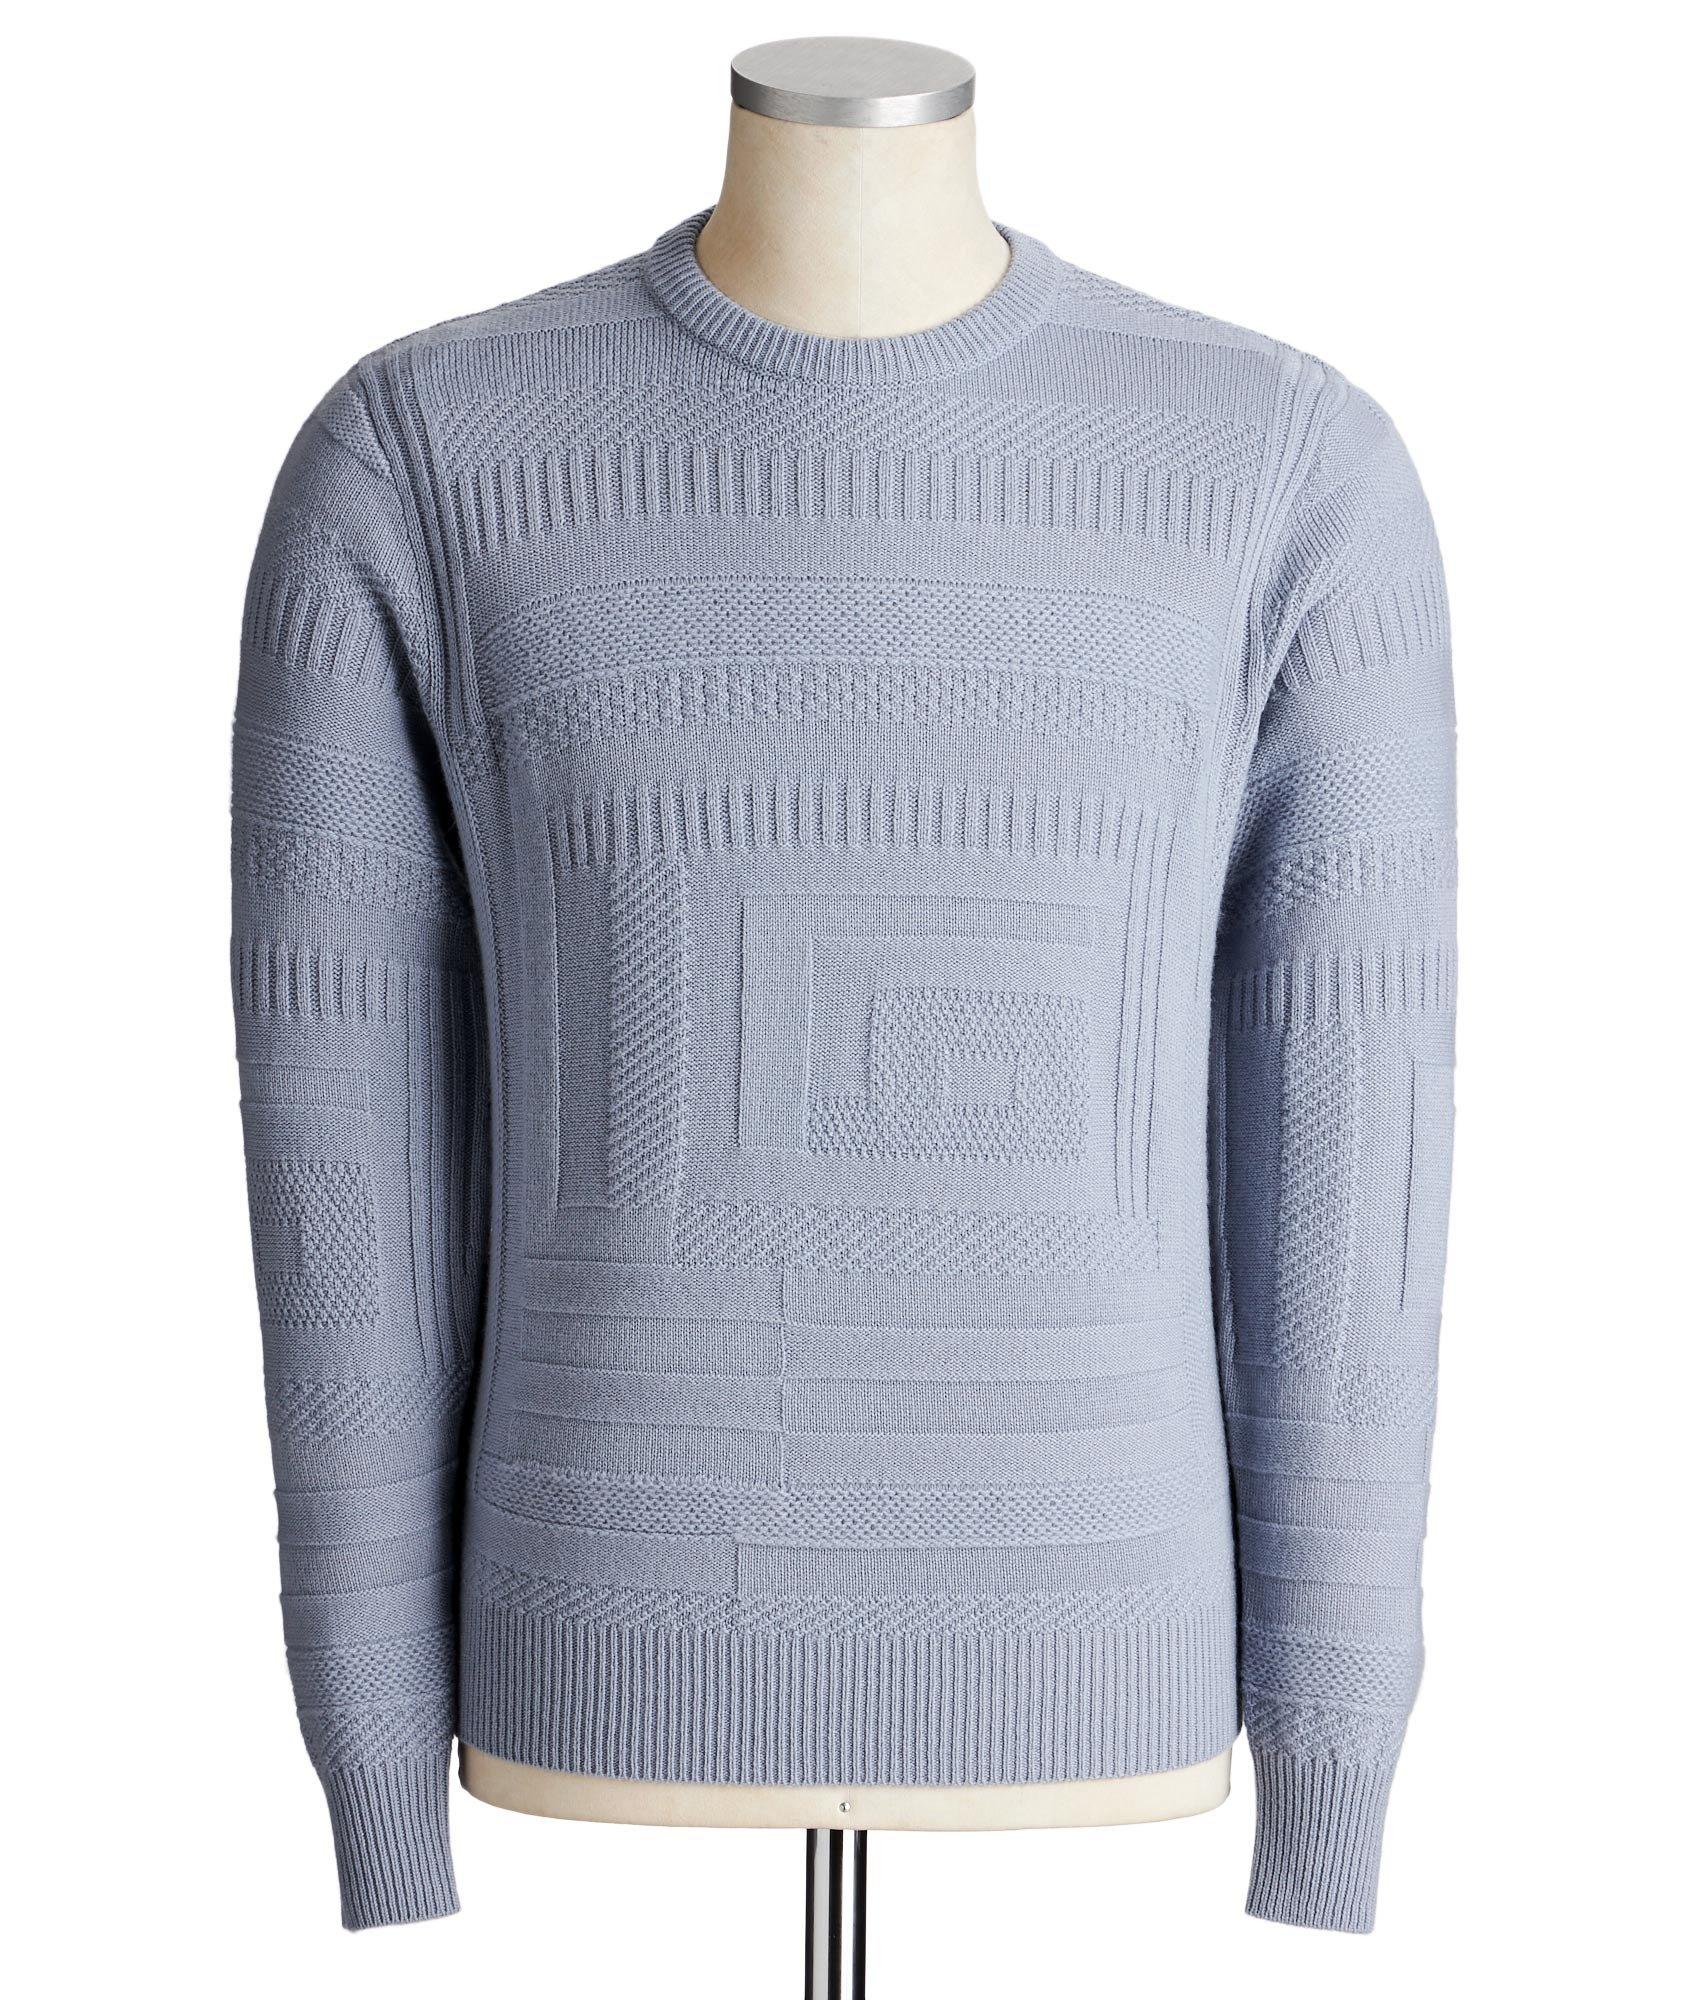 Geometric-Knit Cashmere Sweater image 0